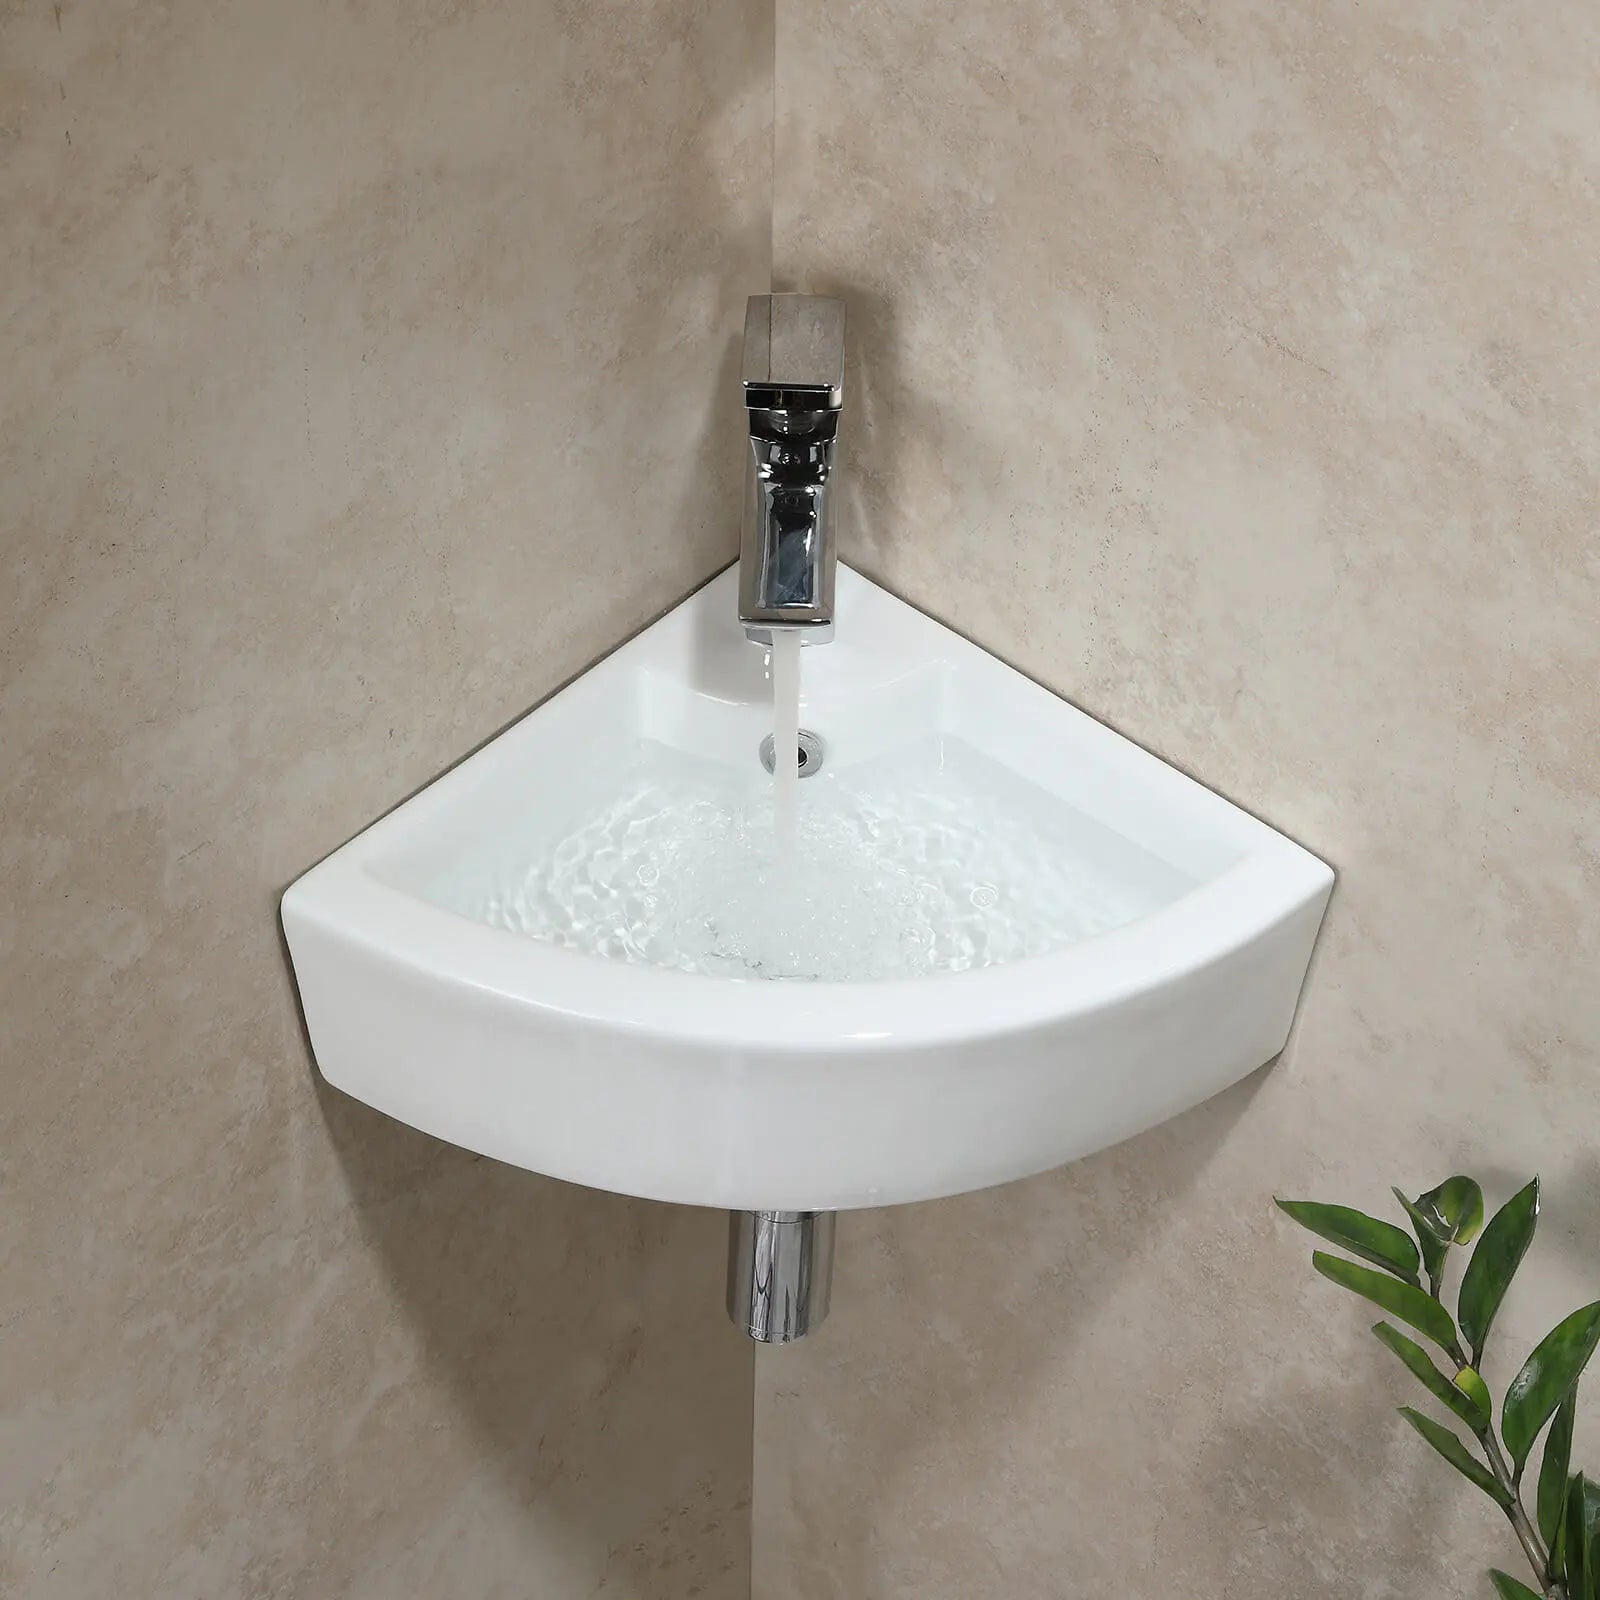 HOROW Wall Mounted Sink Bathroom Basin With Overflow Model HWTP-C3232W